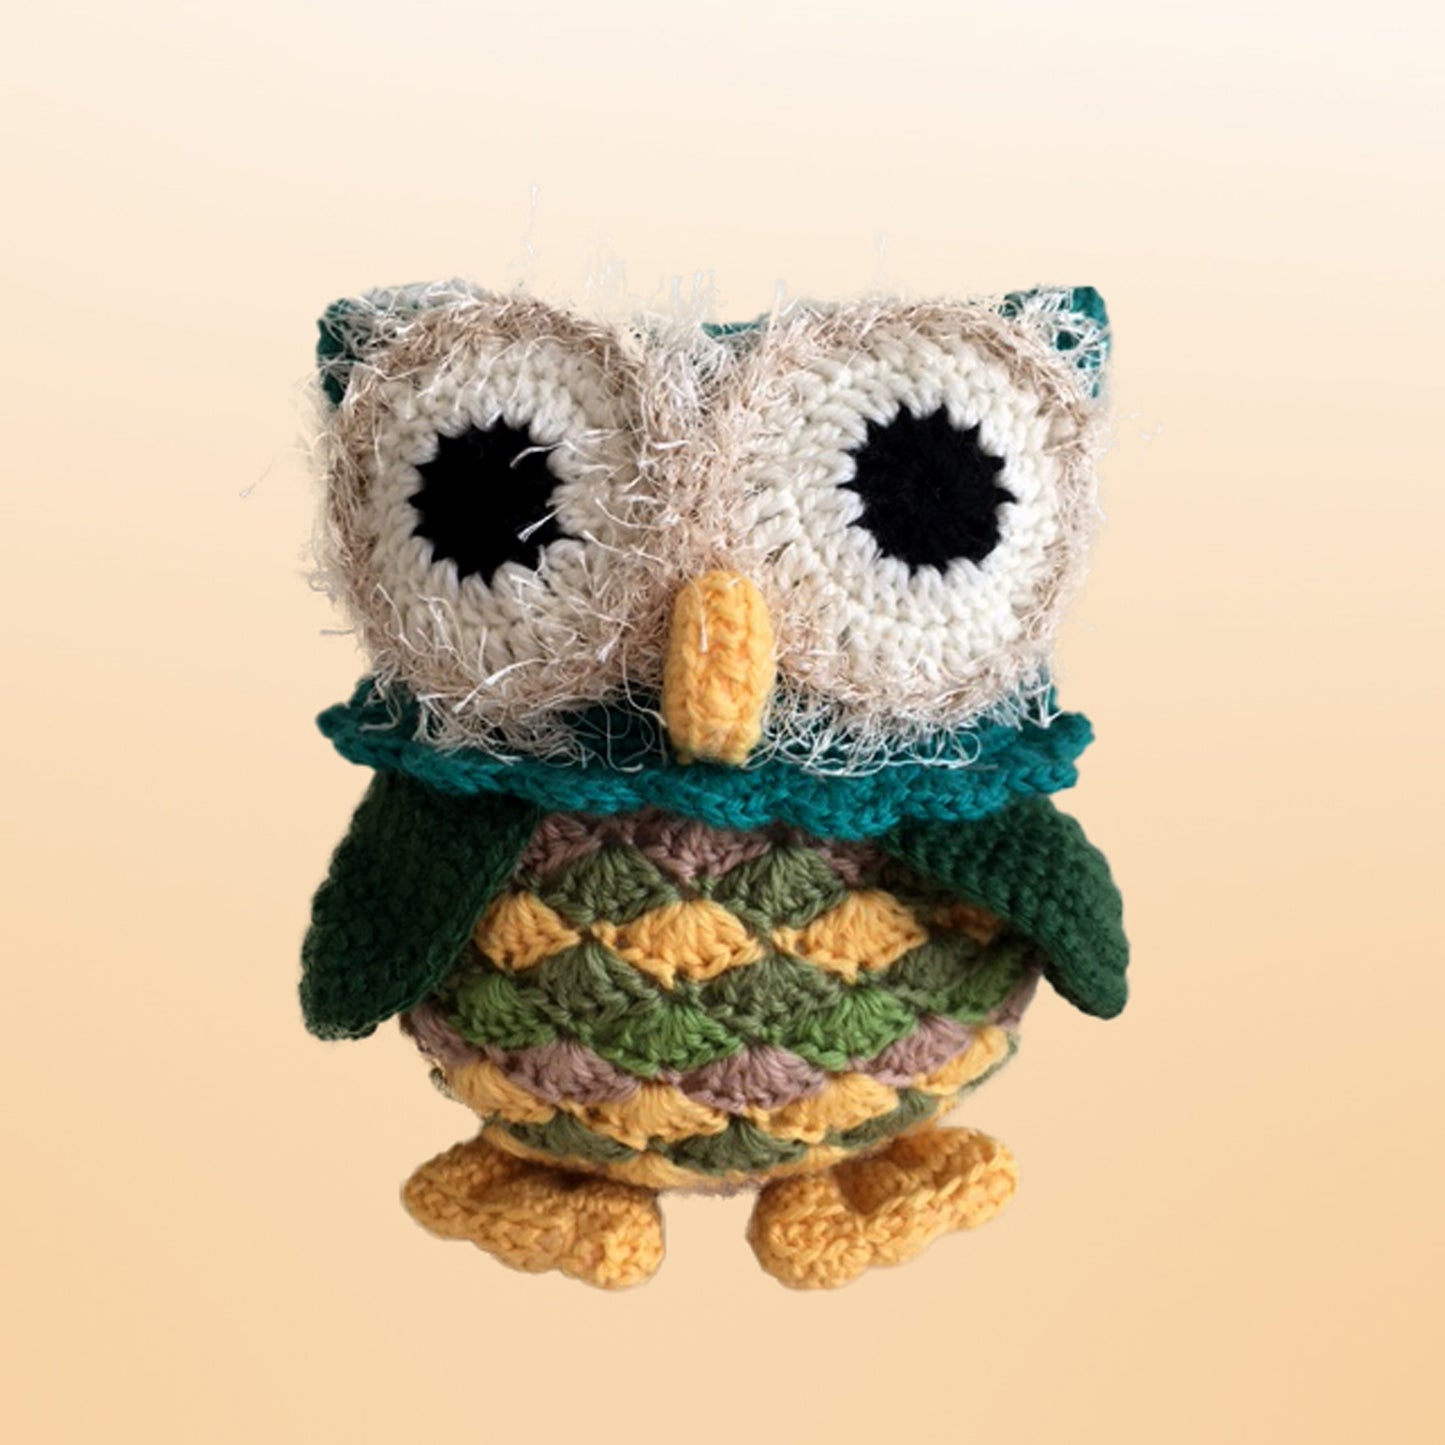 Cuddly Owl with a yellow beak in Australian wool